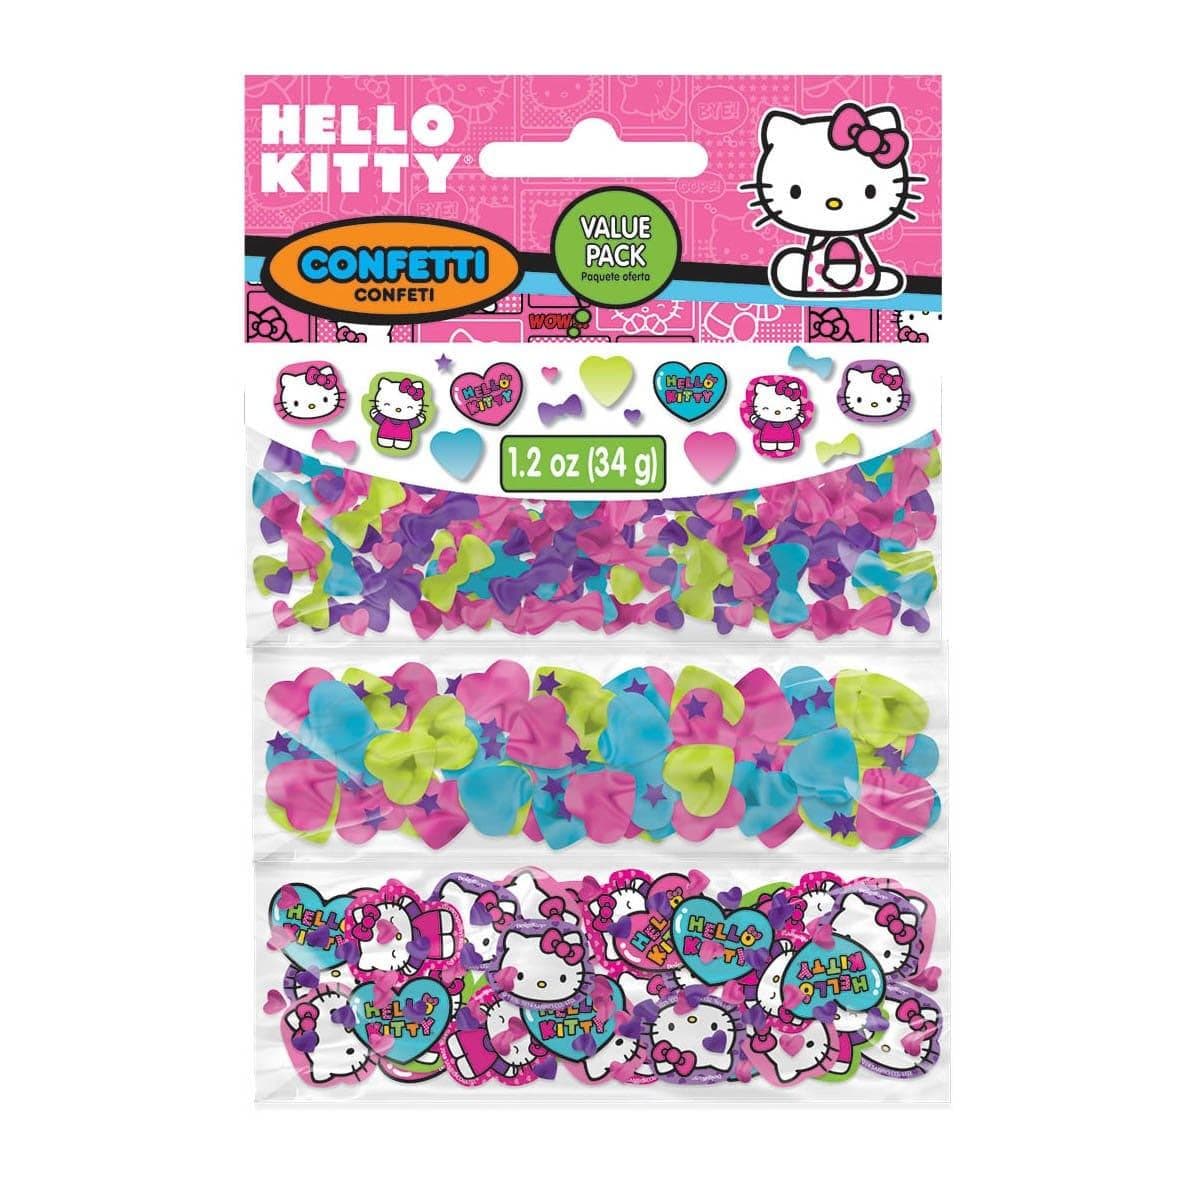 Buy Kids Birthday Hello Kitty Rainbow confetti sold at Party Expert